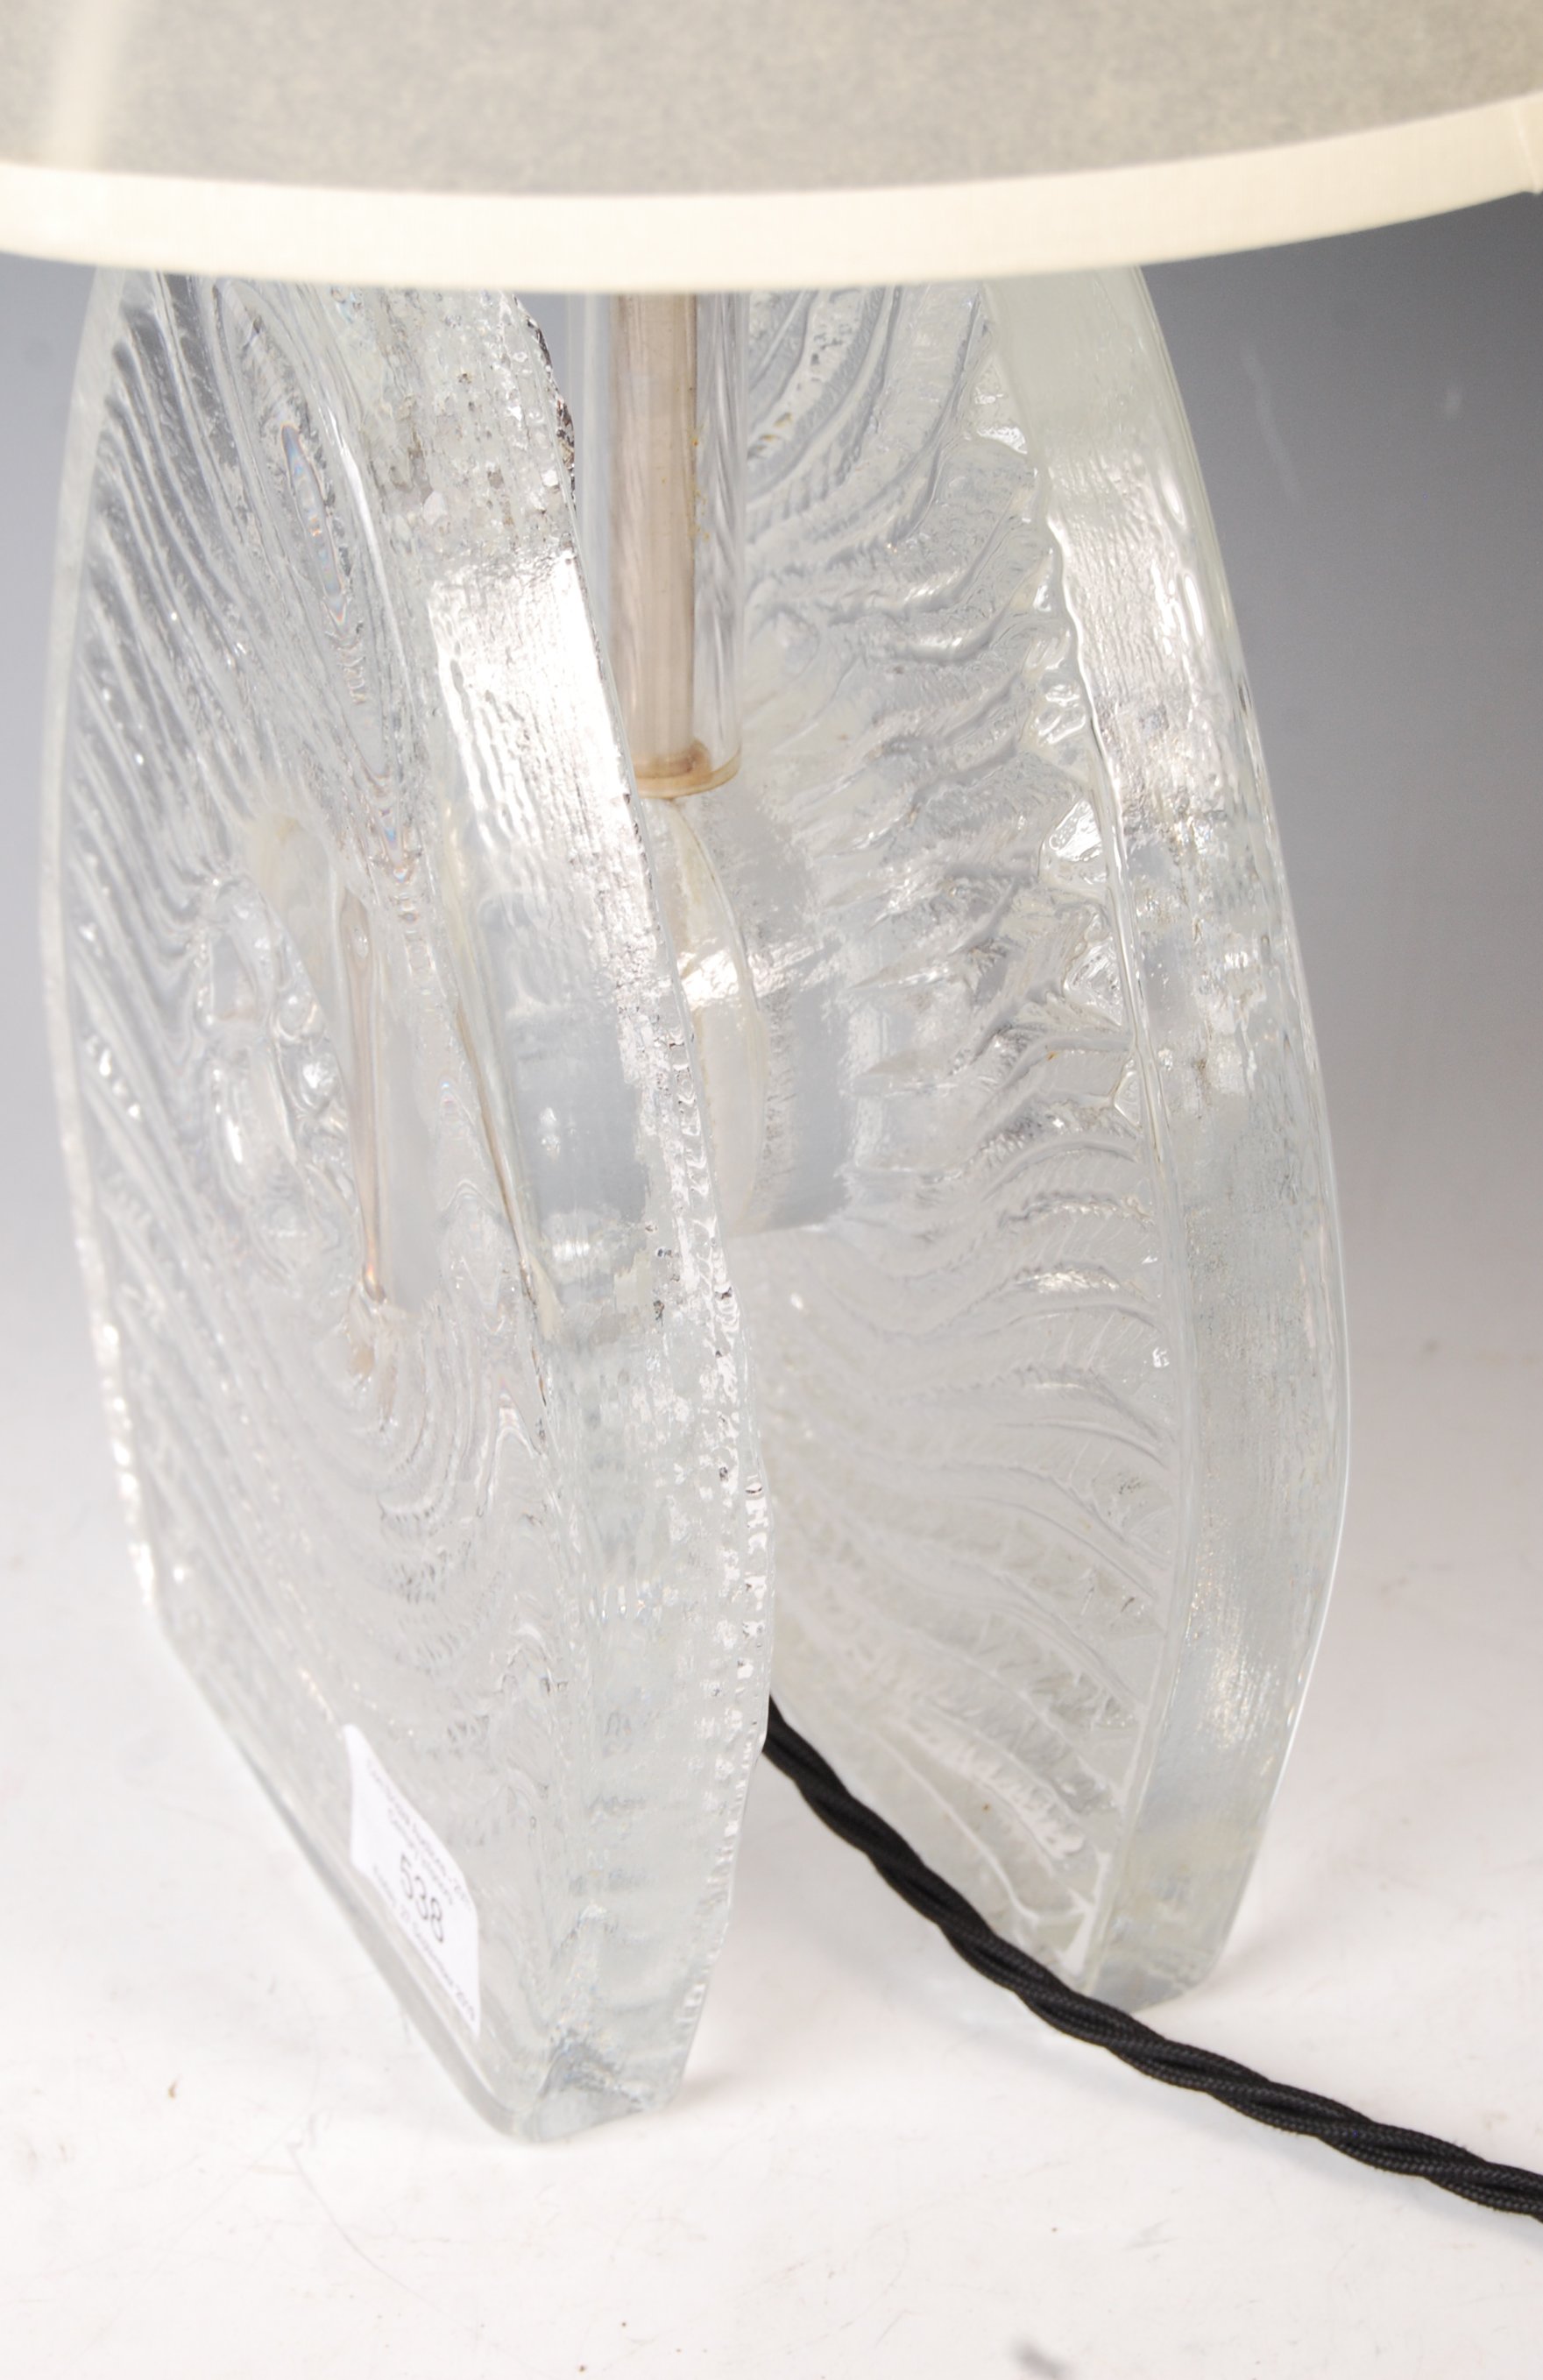 STUNNING SCANDINAVIAN RETRO STUDIO ART GLASS TABLE LAMP - Image 4 of 4